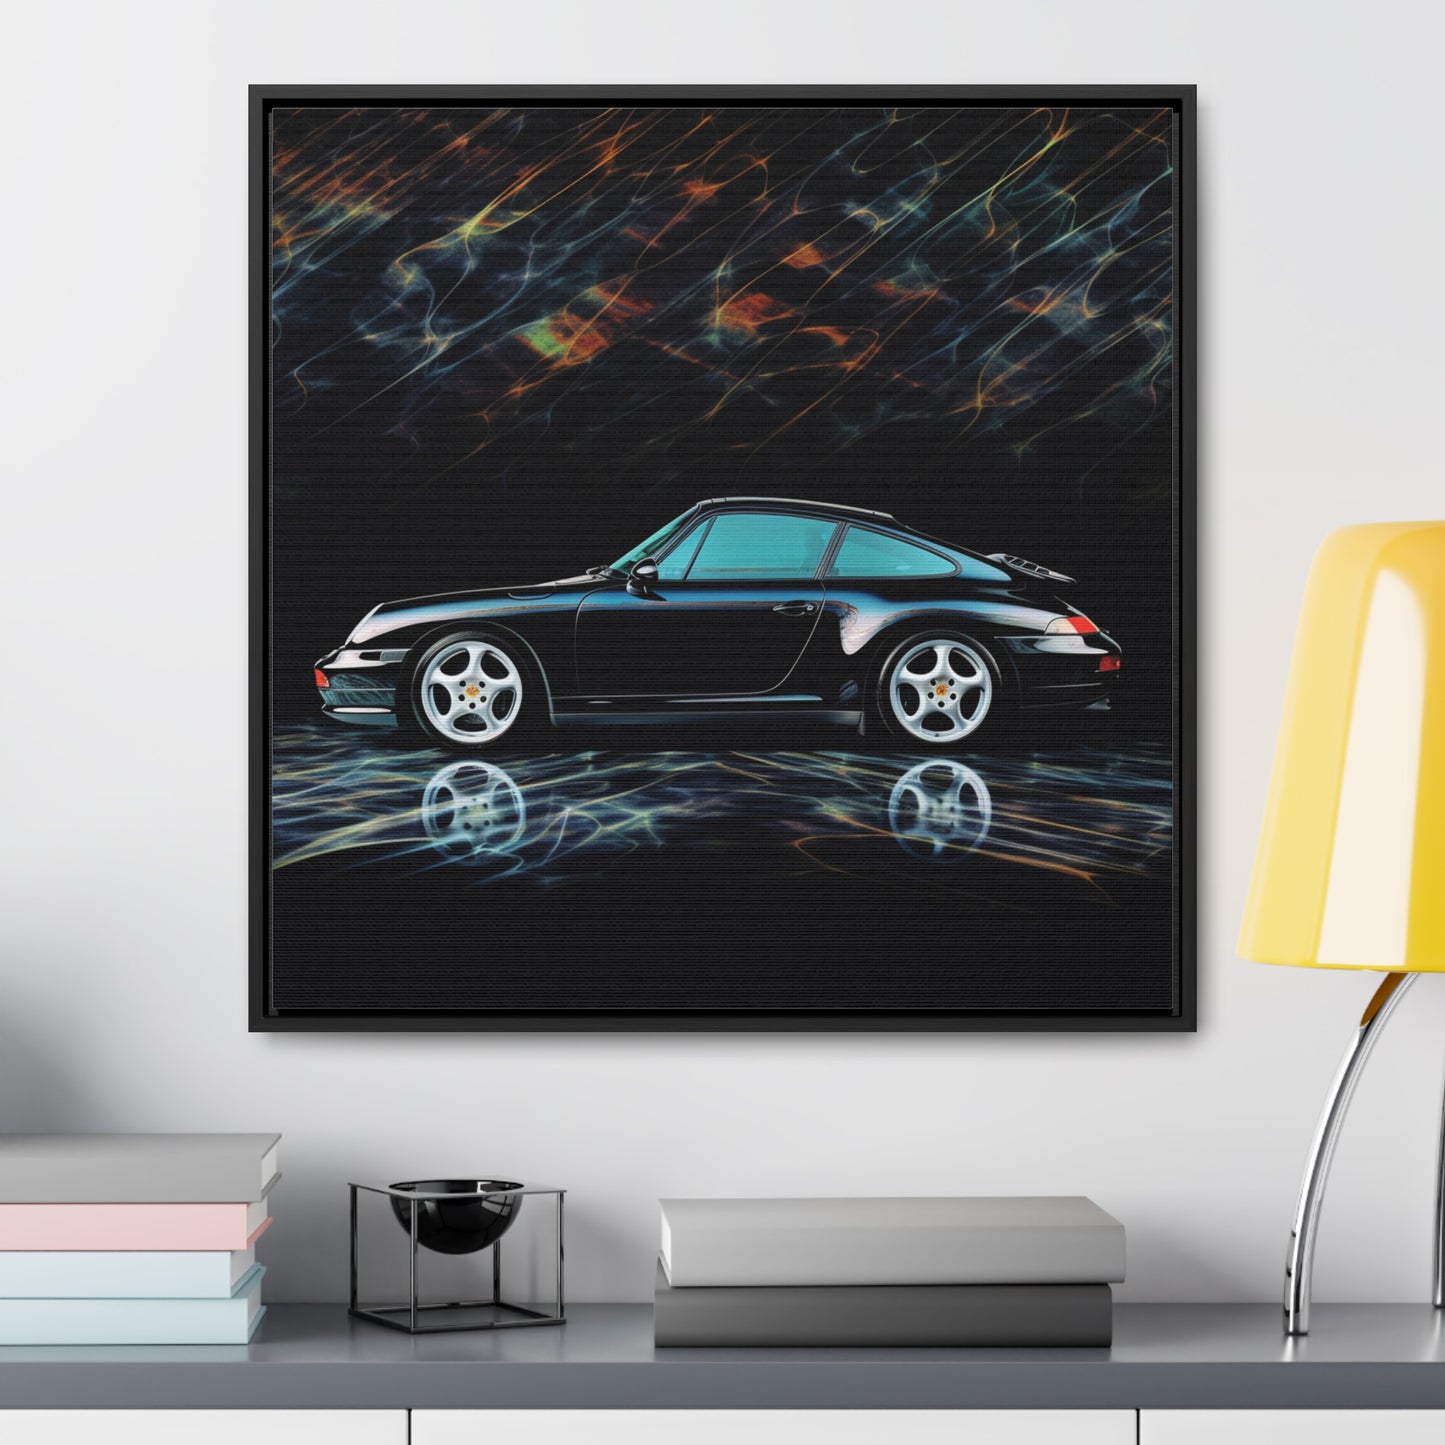 Gallery Canvas Wraps, Square Frame Porsche 933 2